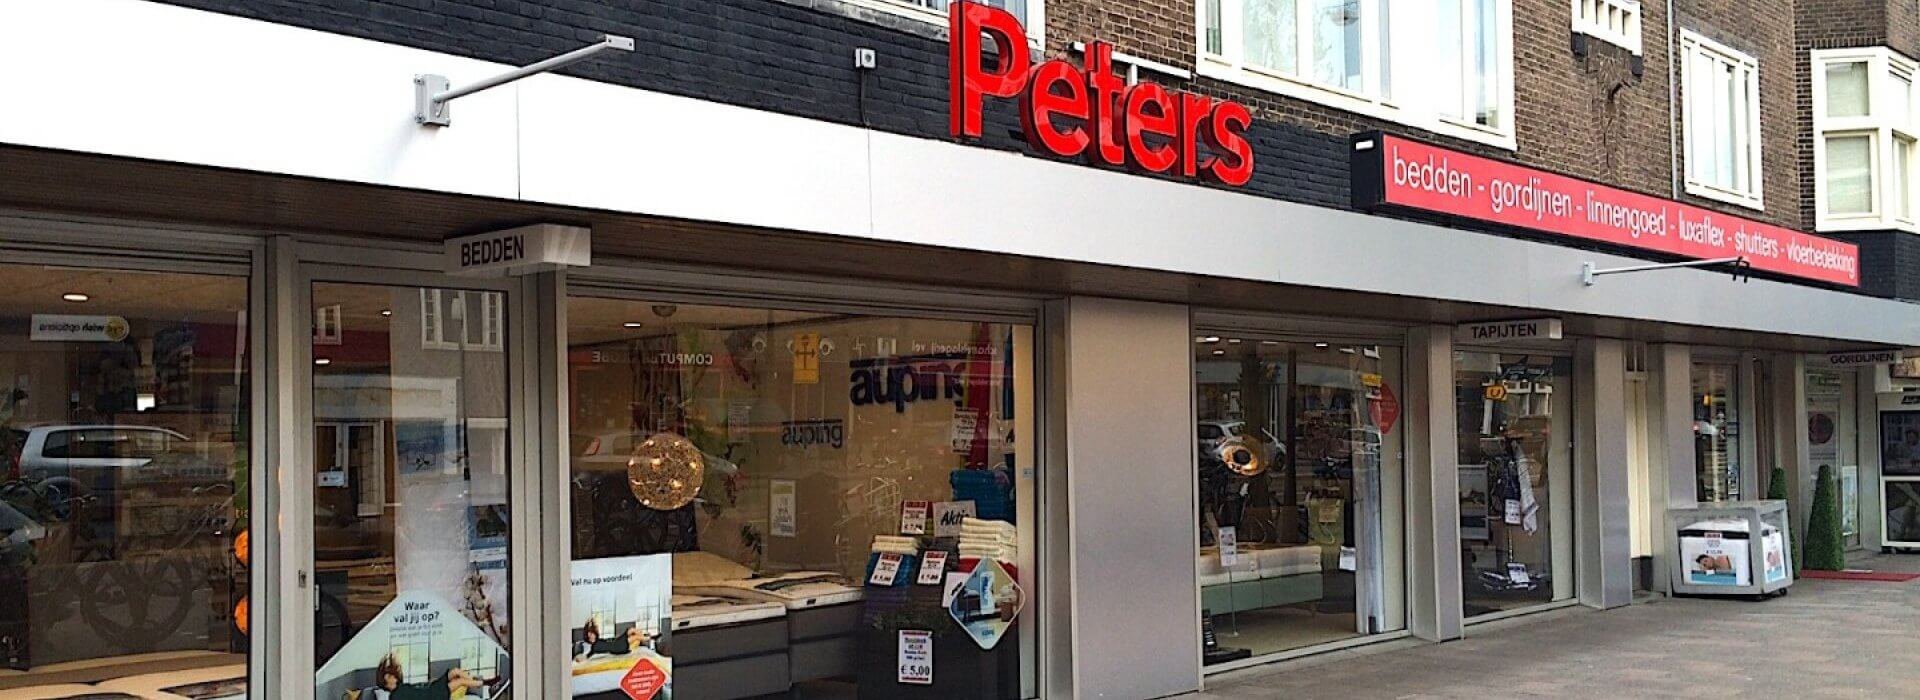 Peters-Wonen-Amsterdam.jpg